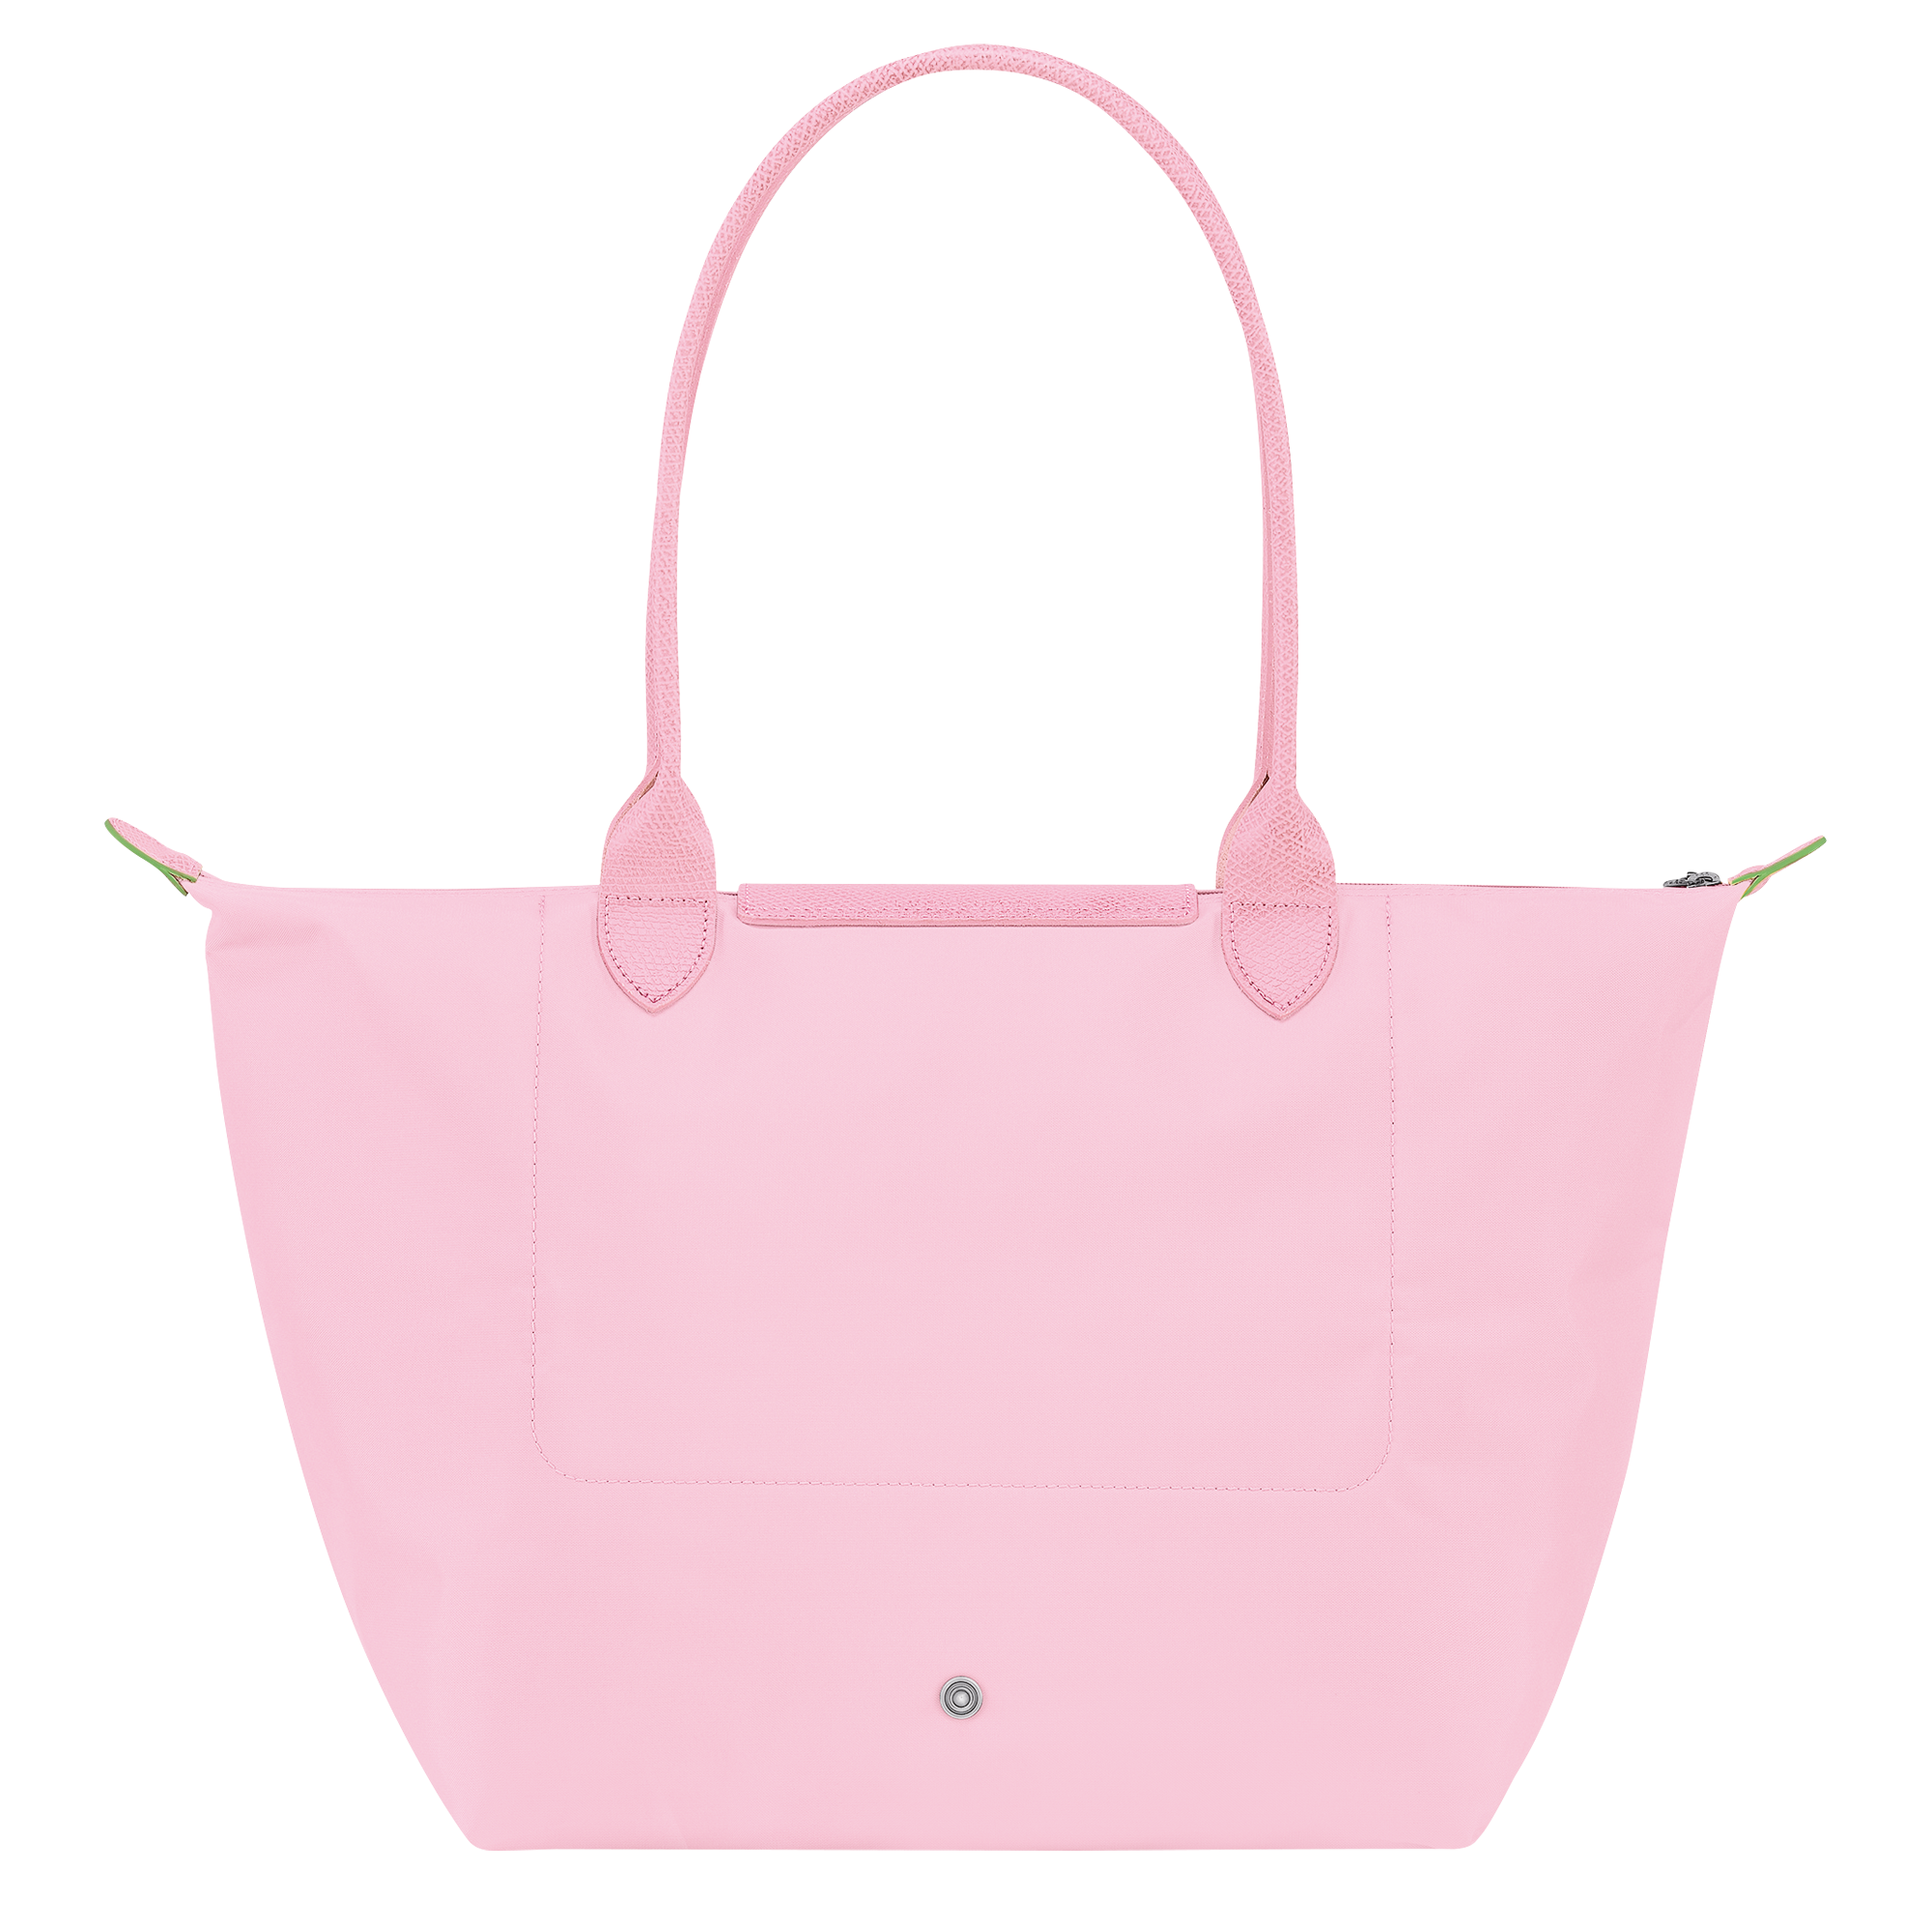 Longchamp Mini Le Pliage Tote - Neutrals Mini Bags, Handbags - WL865708